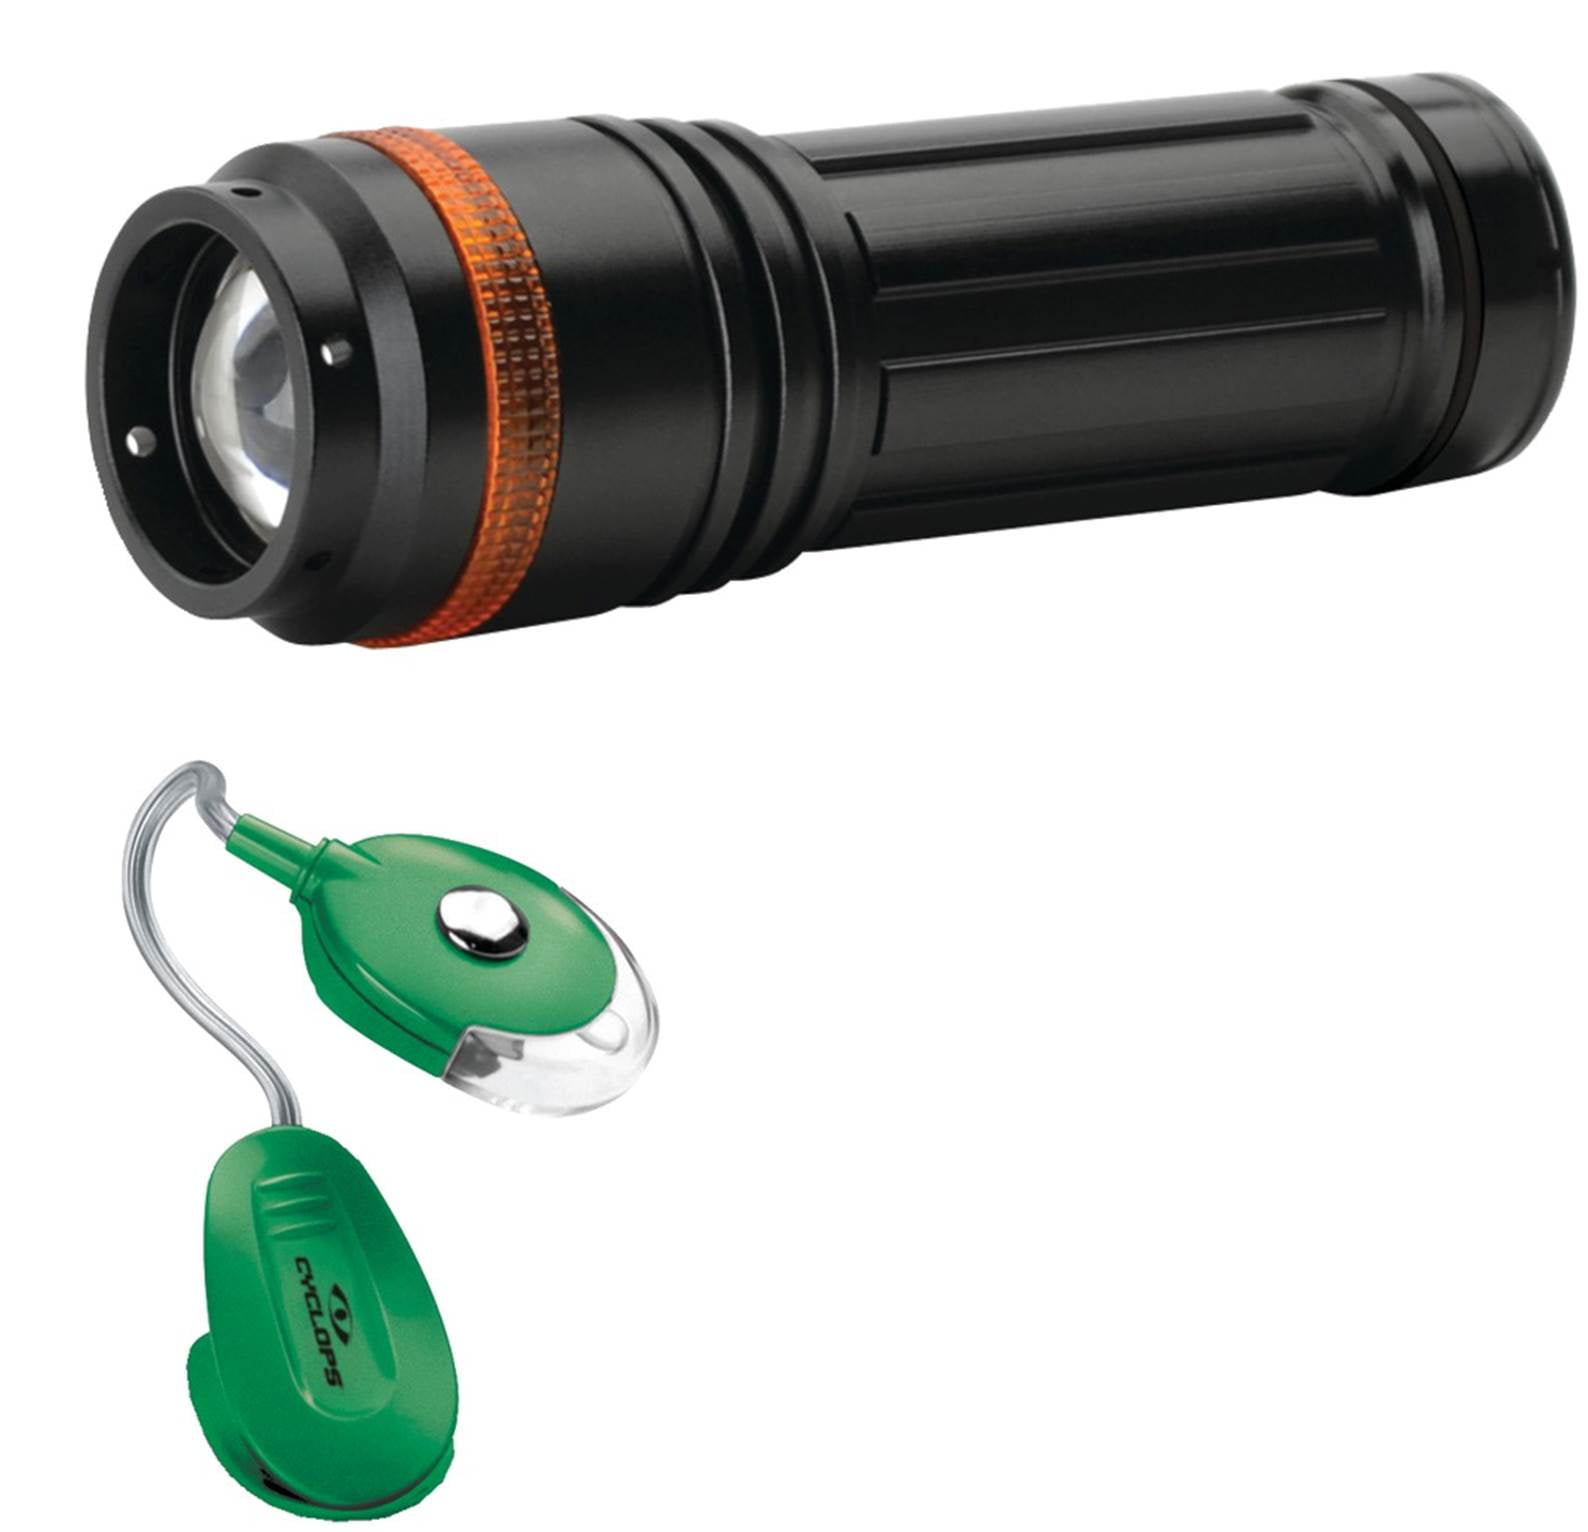 New Cyclops Clip Flashlight Work Light Multitask LED Utility Green 4.5 Lumen 